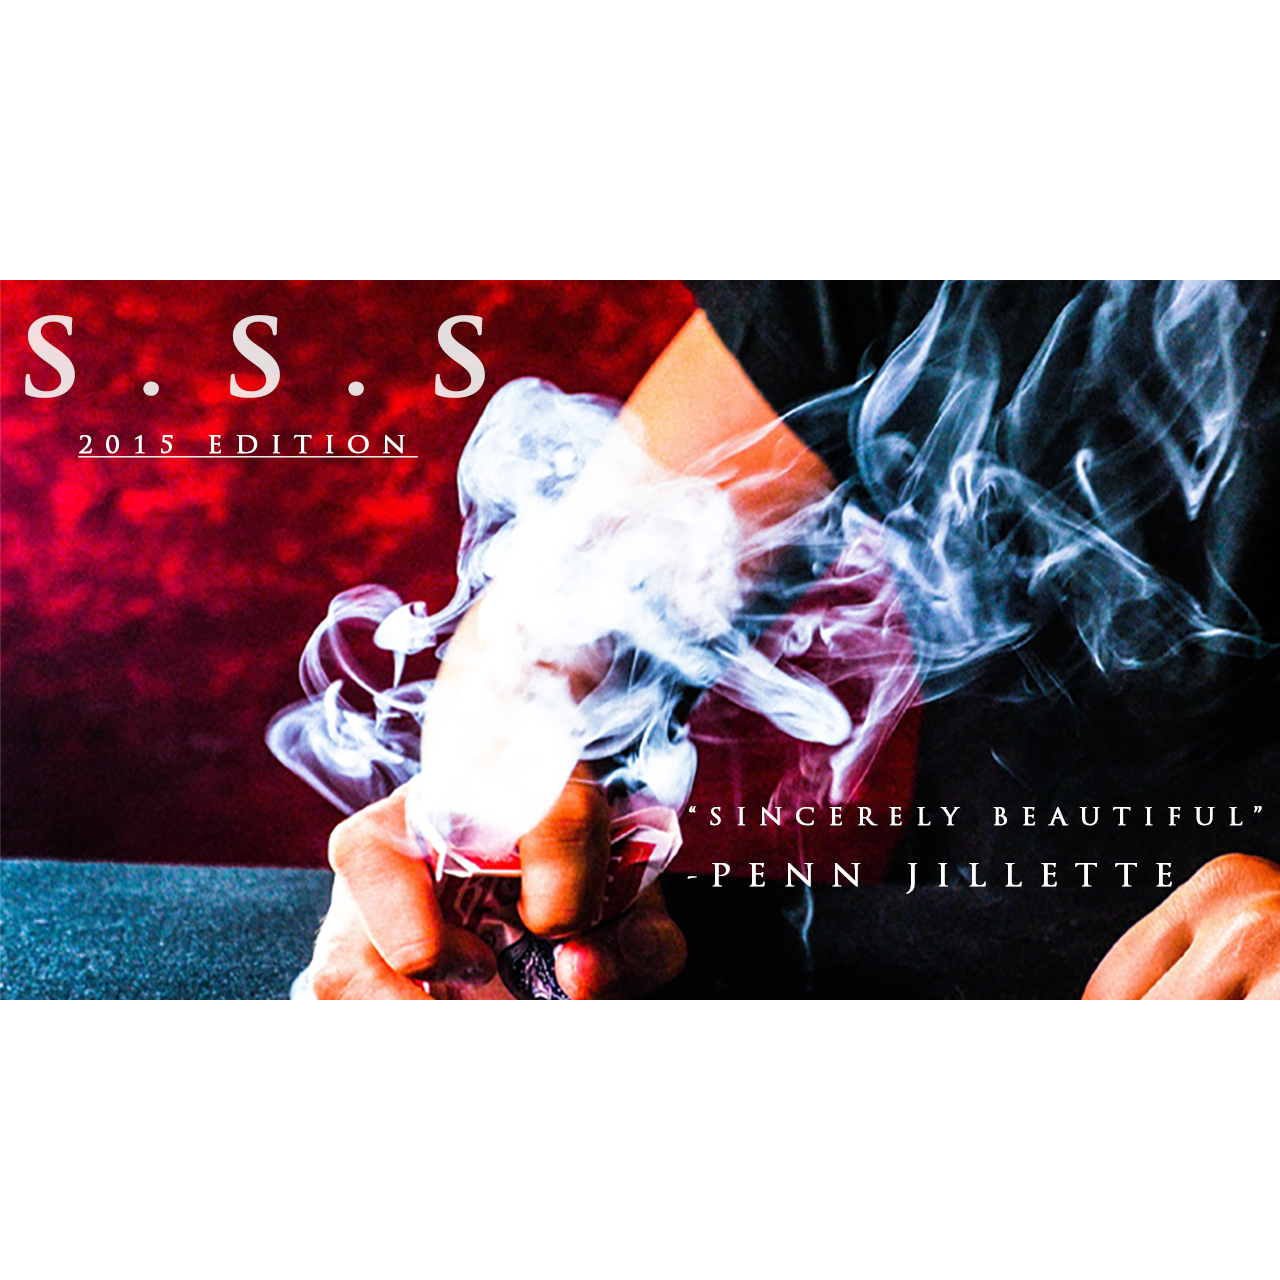 SSS (2015 Edition) by Shin Lim Trick